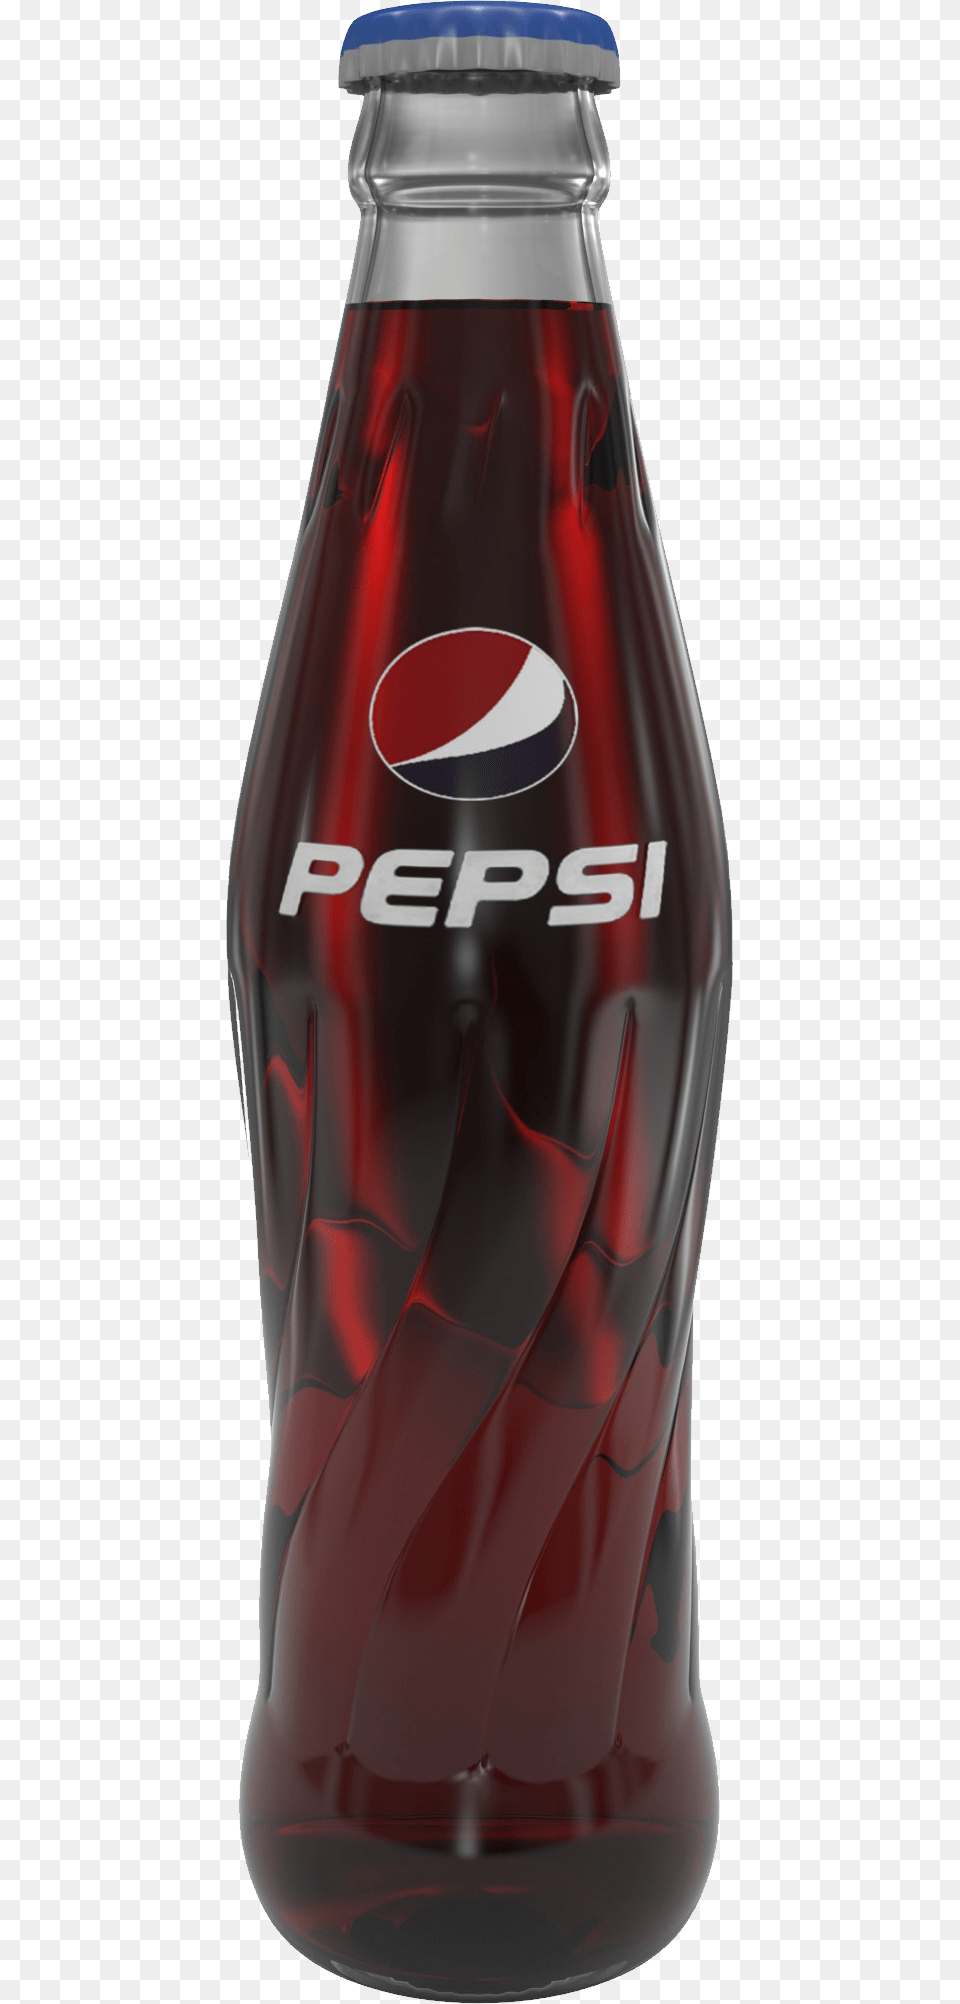 Pepsi, Beverage, Coke, Soda, Bottle Png